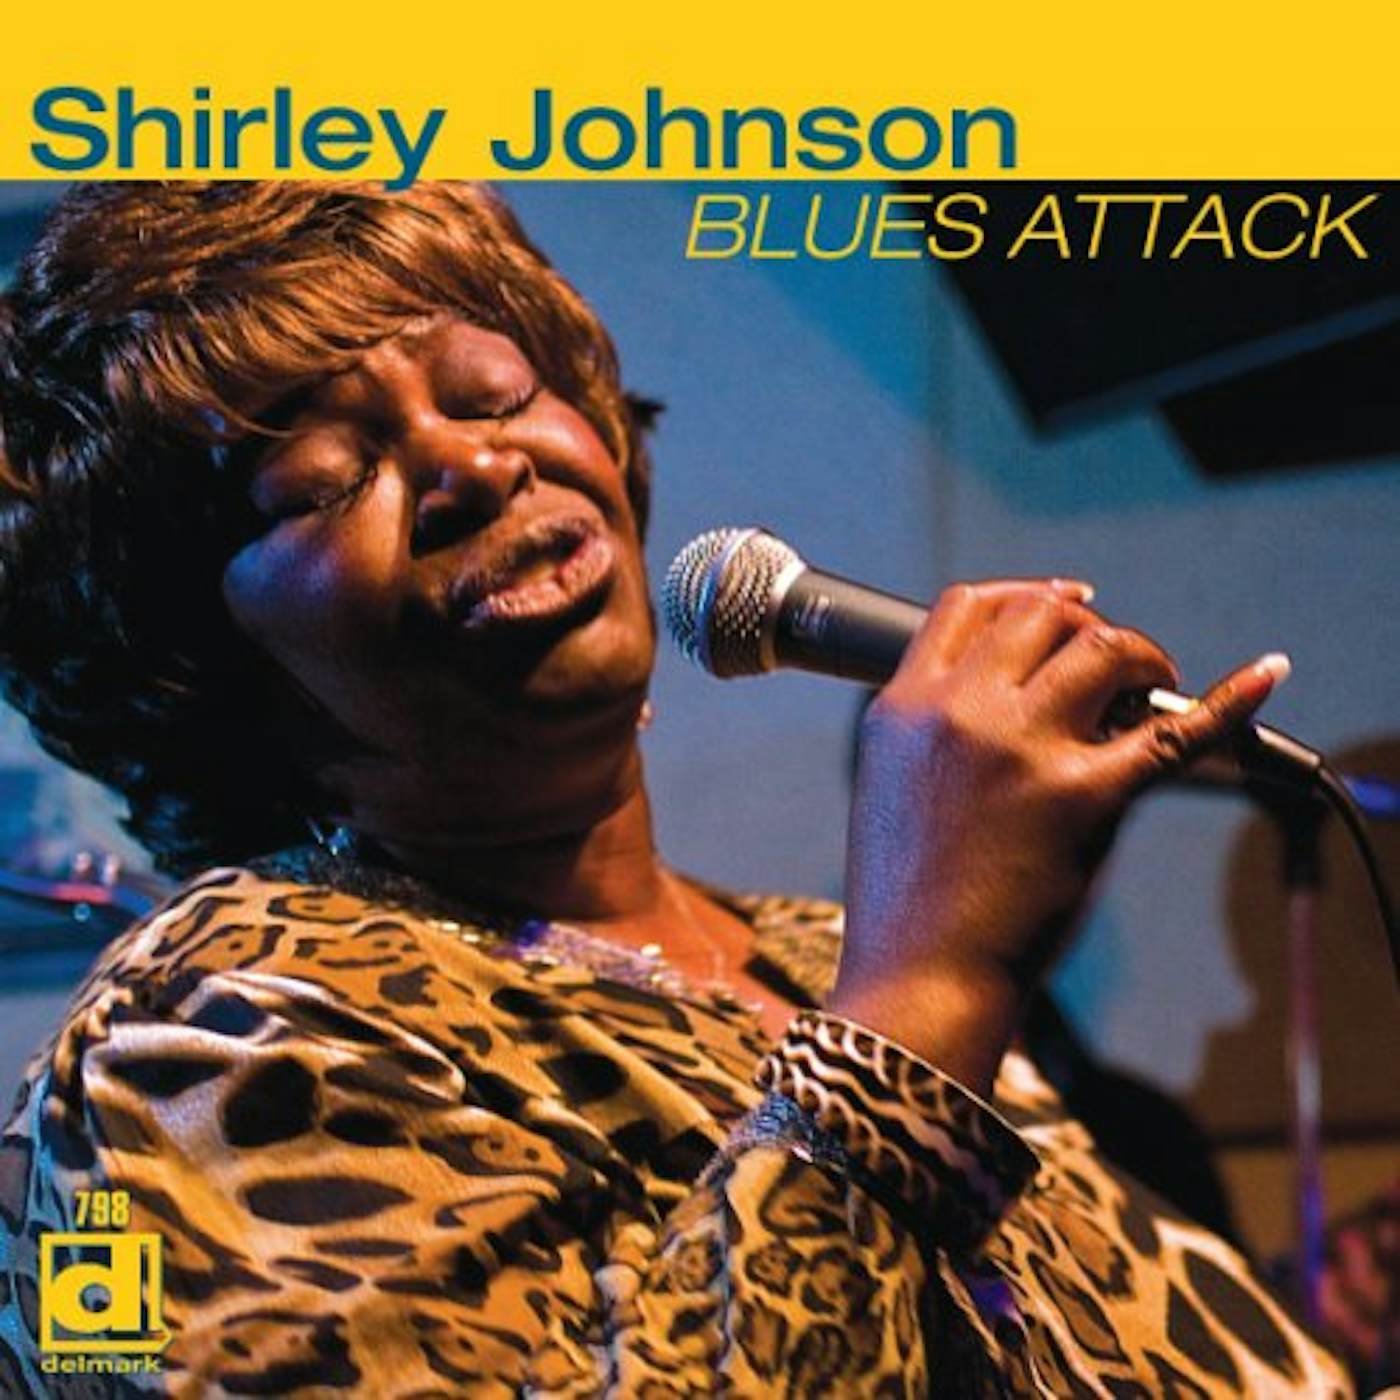 Shirley Johnson BLUES ATTACK CD